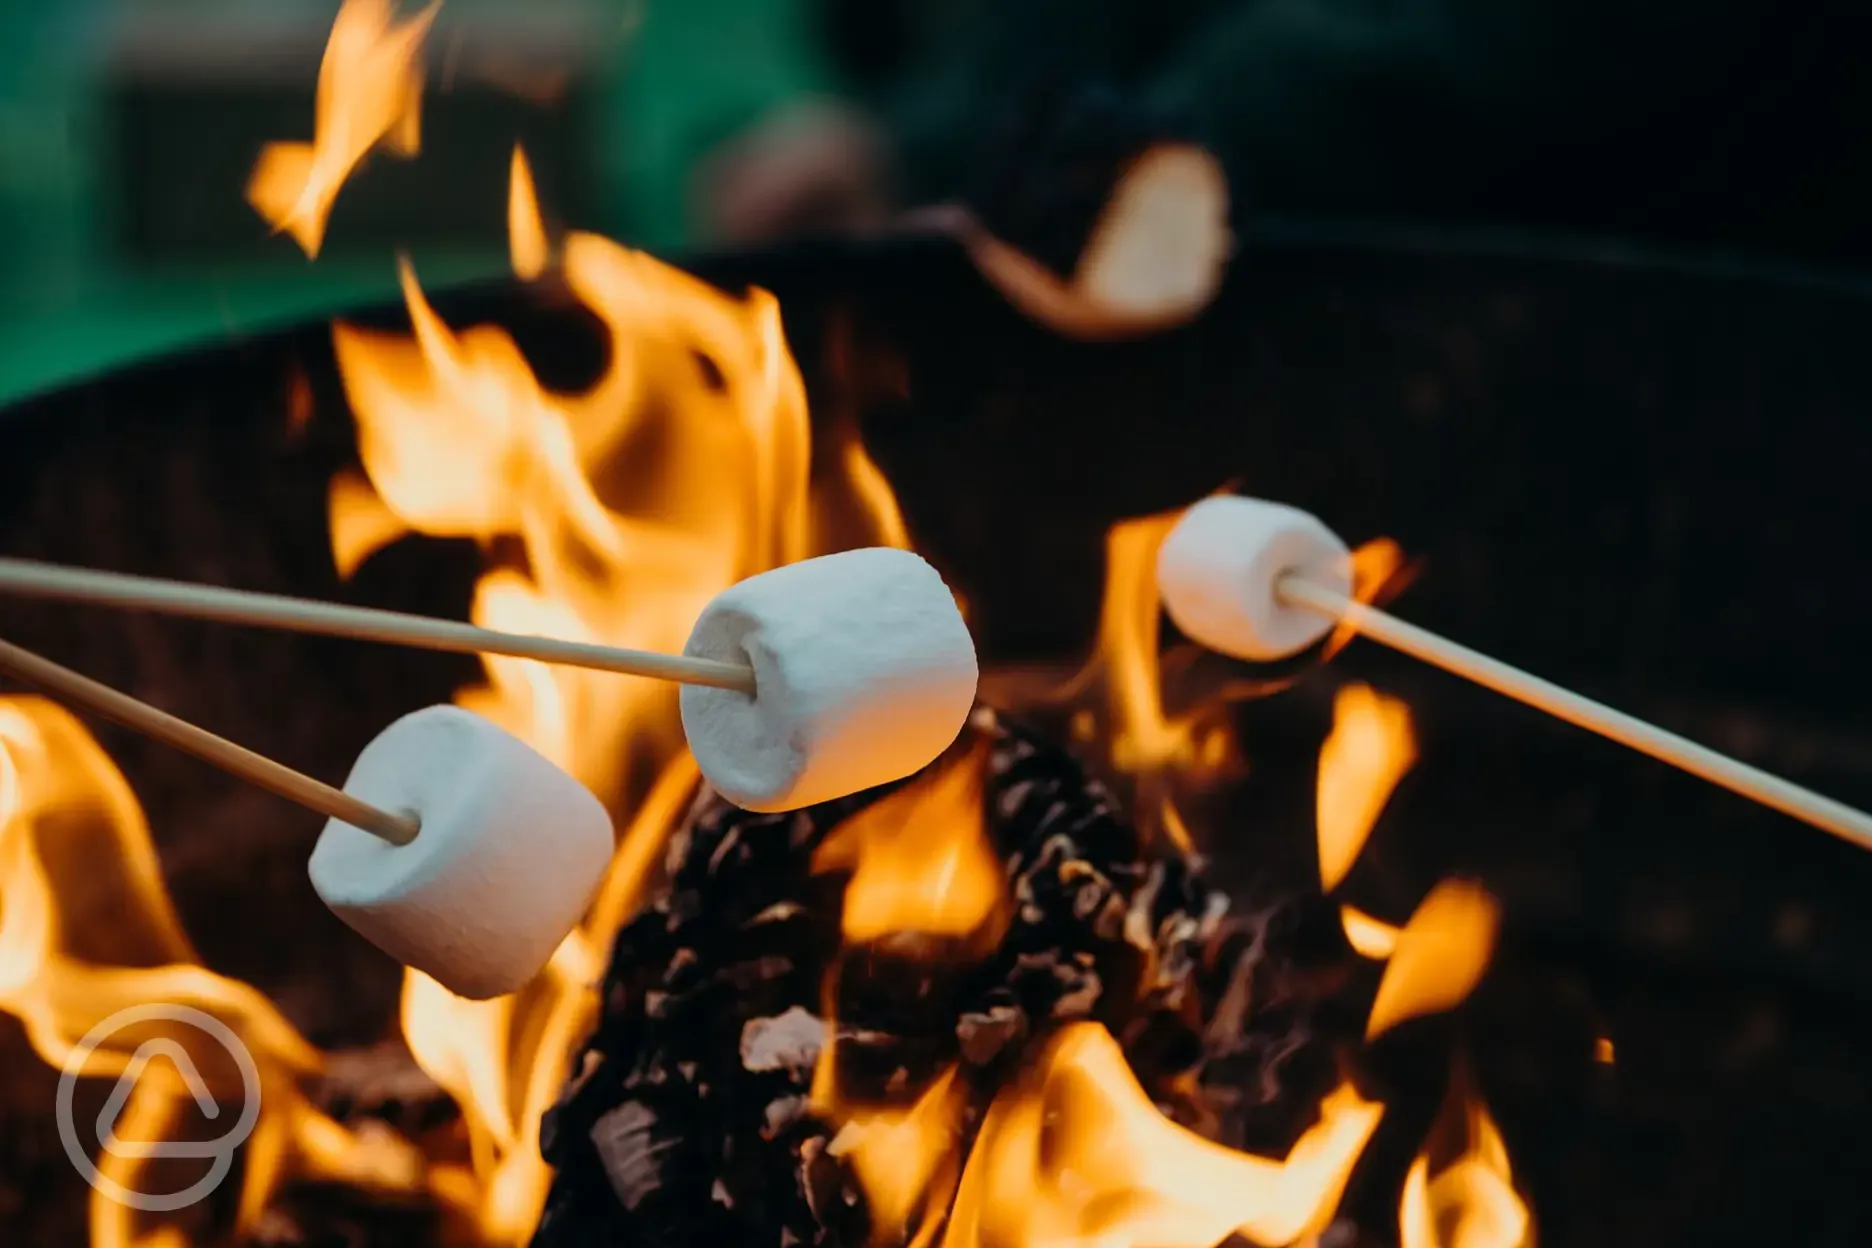 Toast marshmallows round the fire pit